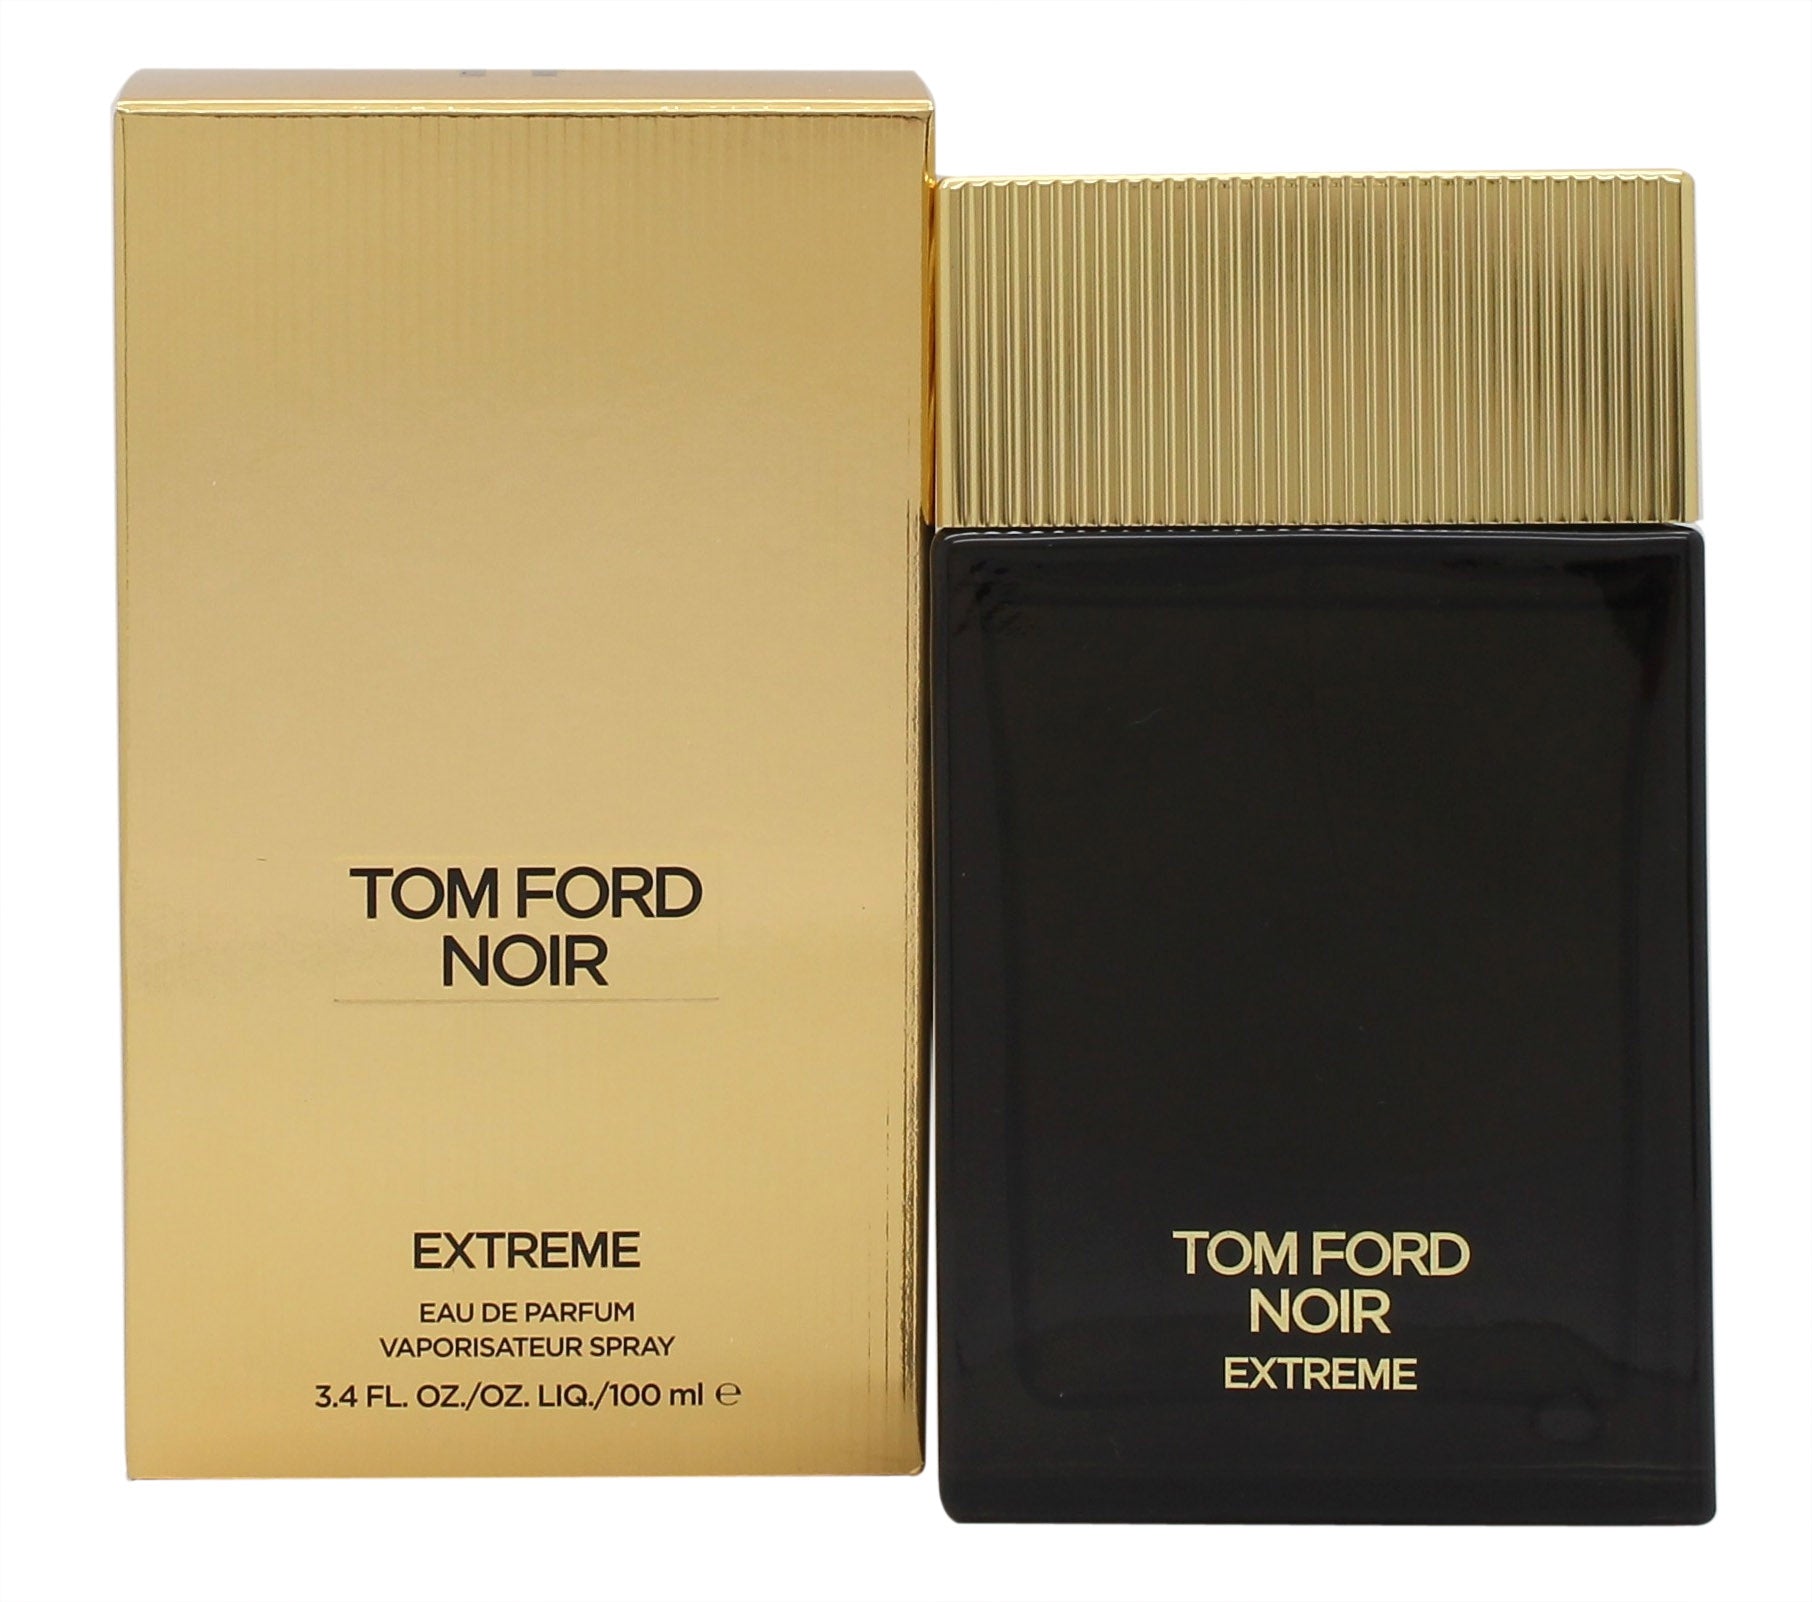 View Tom Ford Noir Extreme Eau de Parfum 100ml Spray information